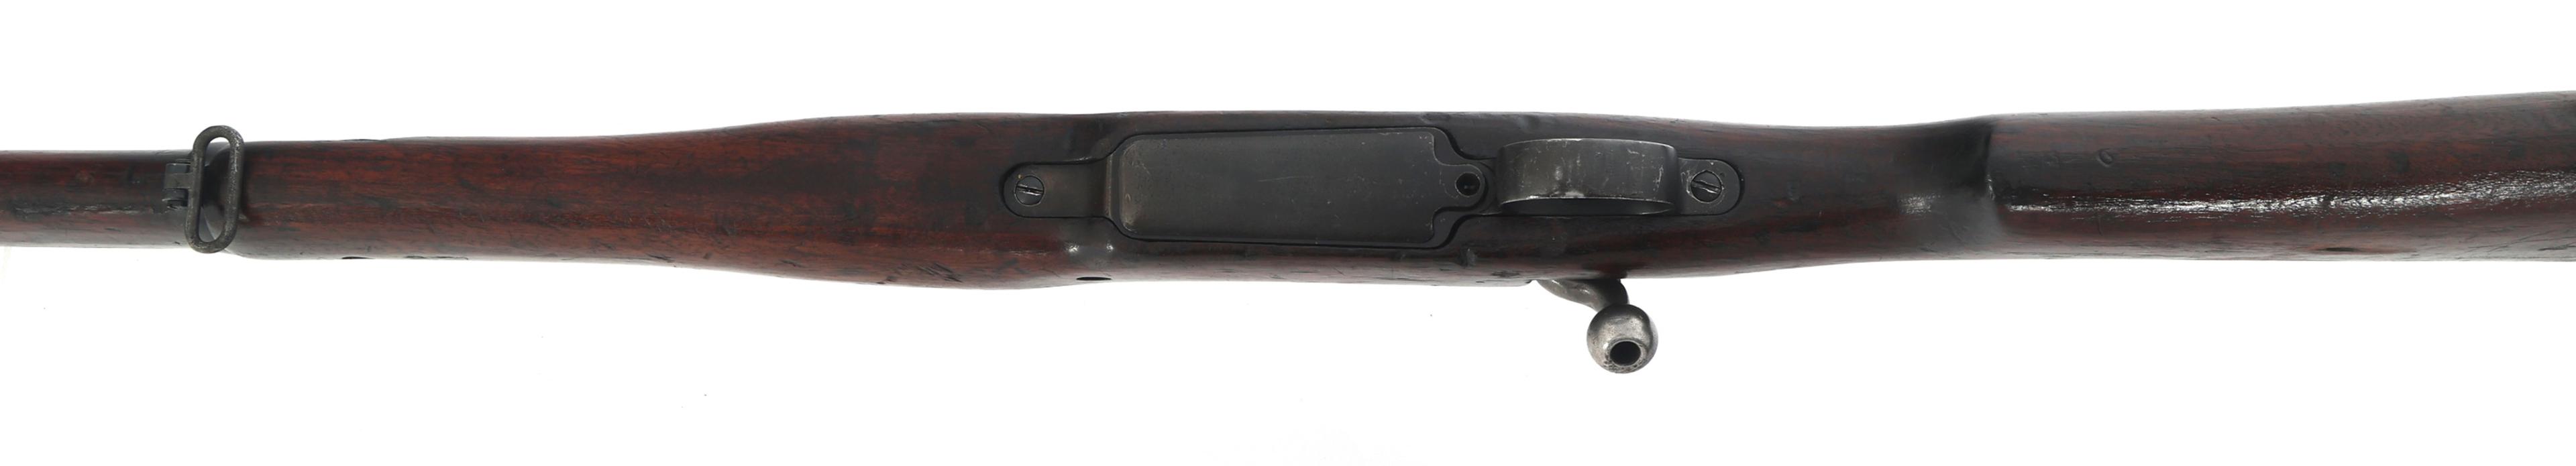 BRITISH WINCHESTER MODEL P14 .303 CALIBER RIFLE